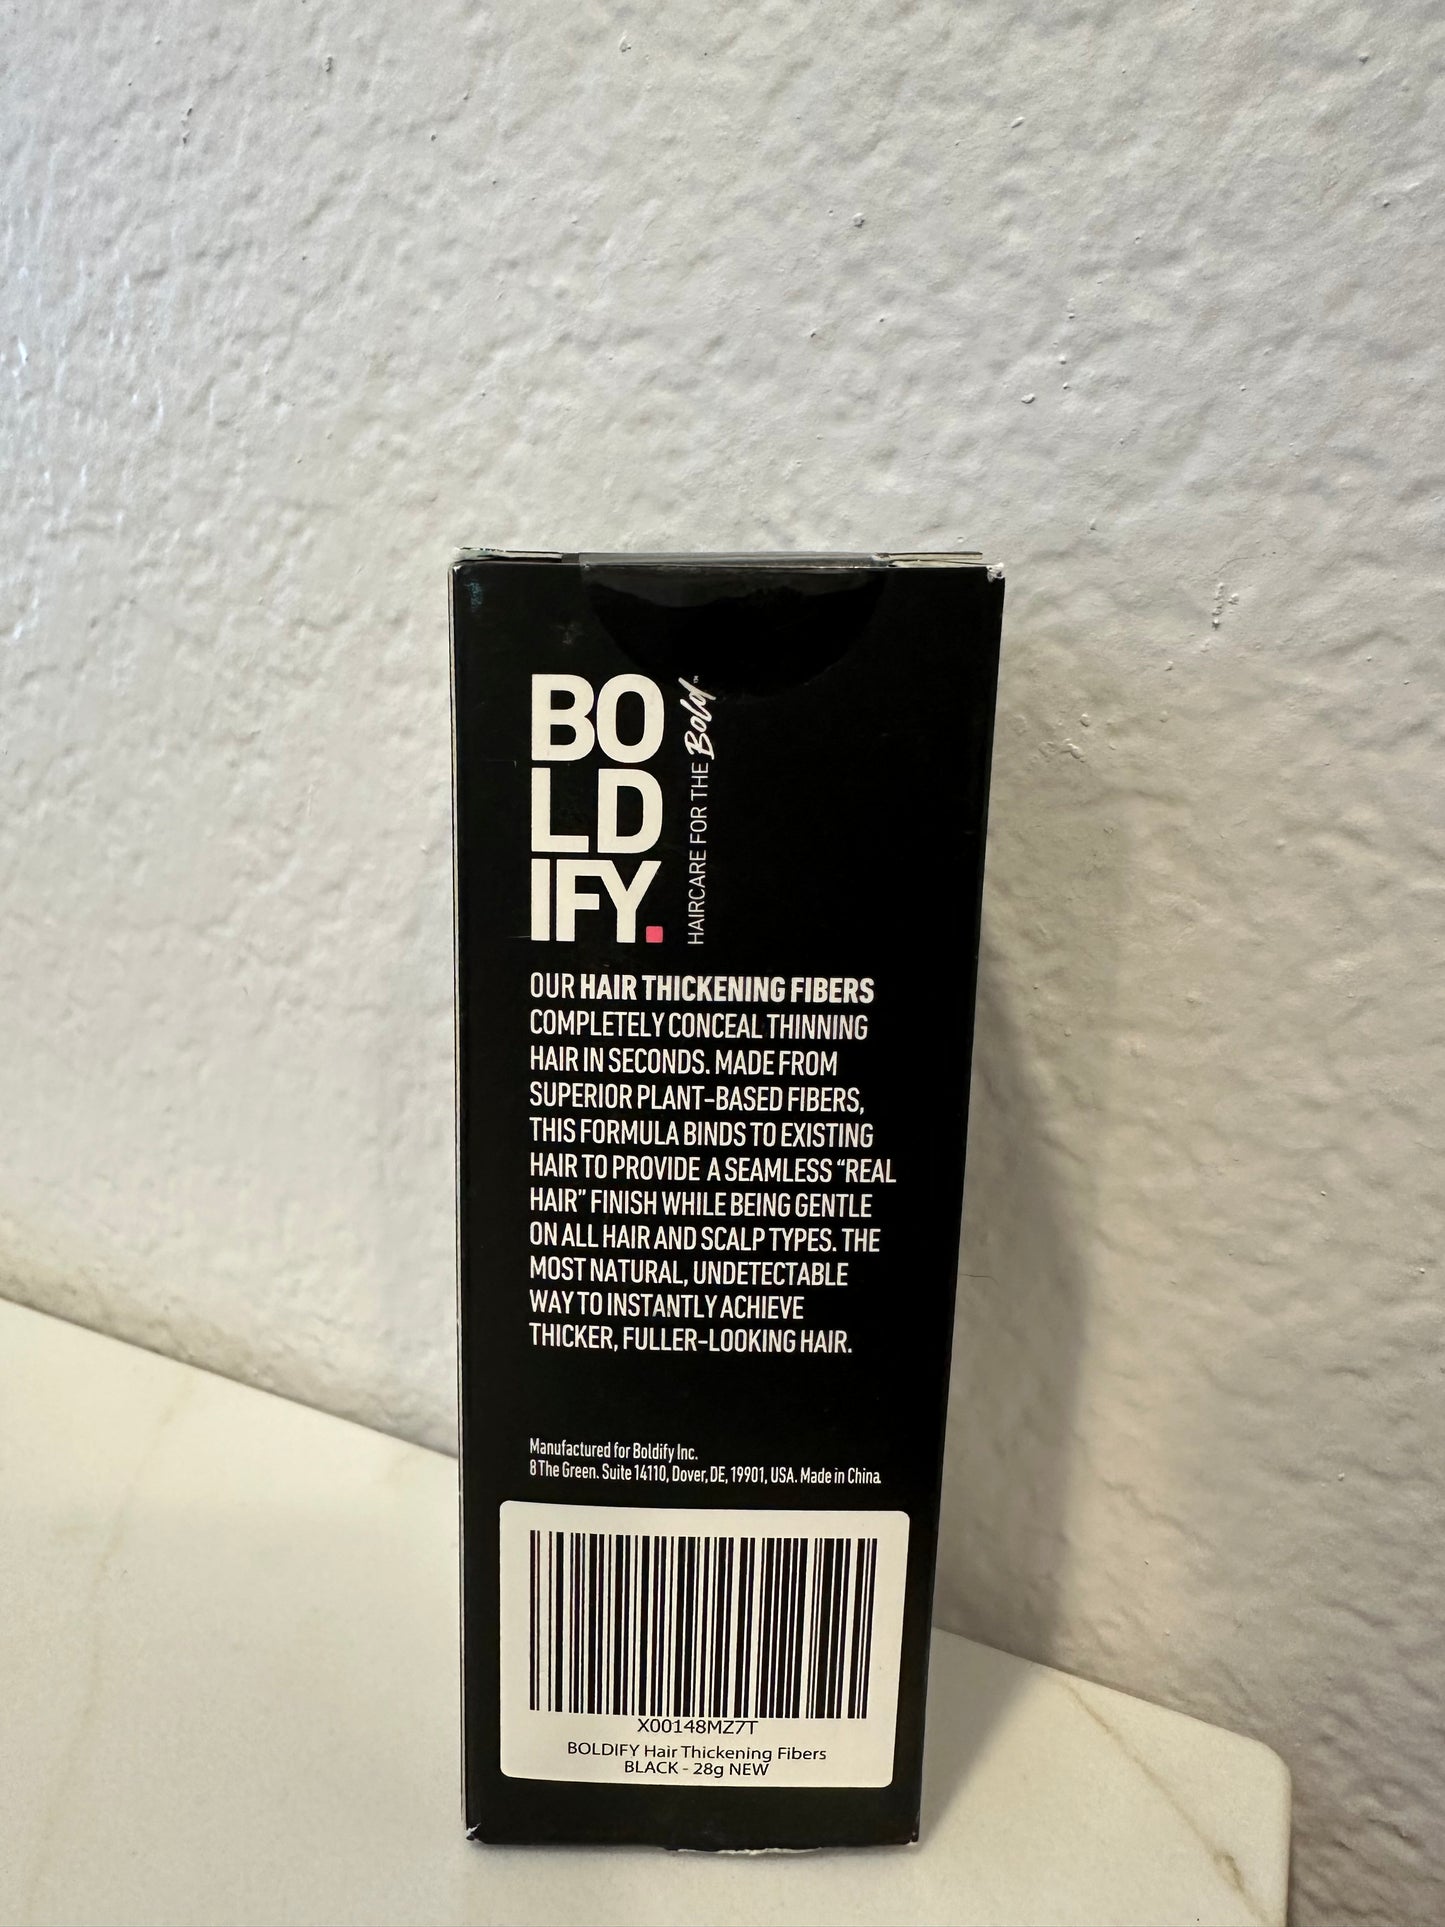 Boldify Enhance Hair Thickening Fibers for Dark Brown Hair - NEW